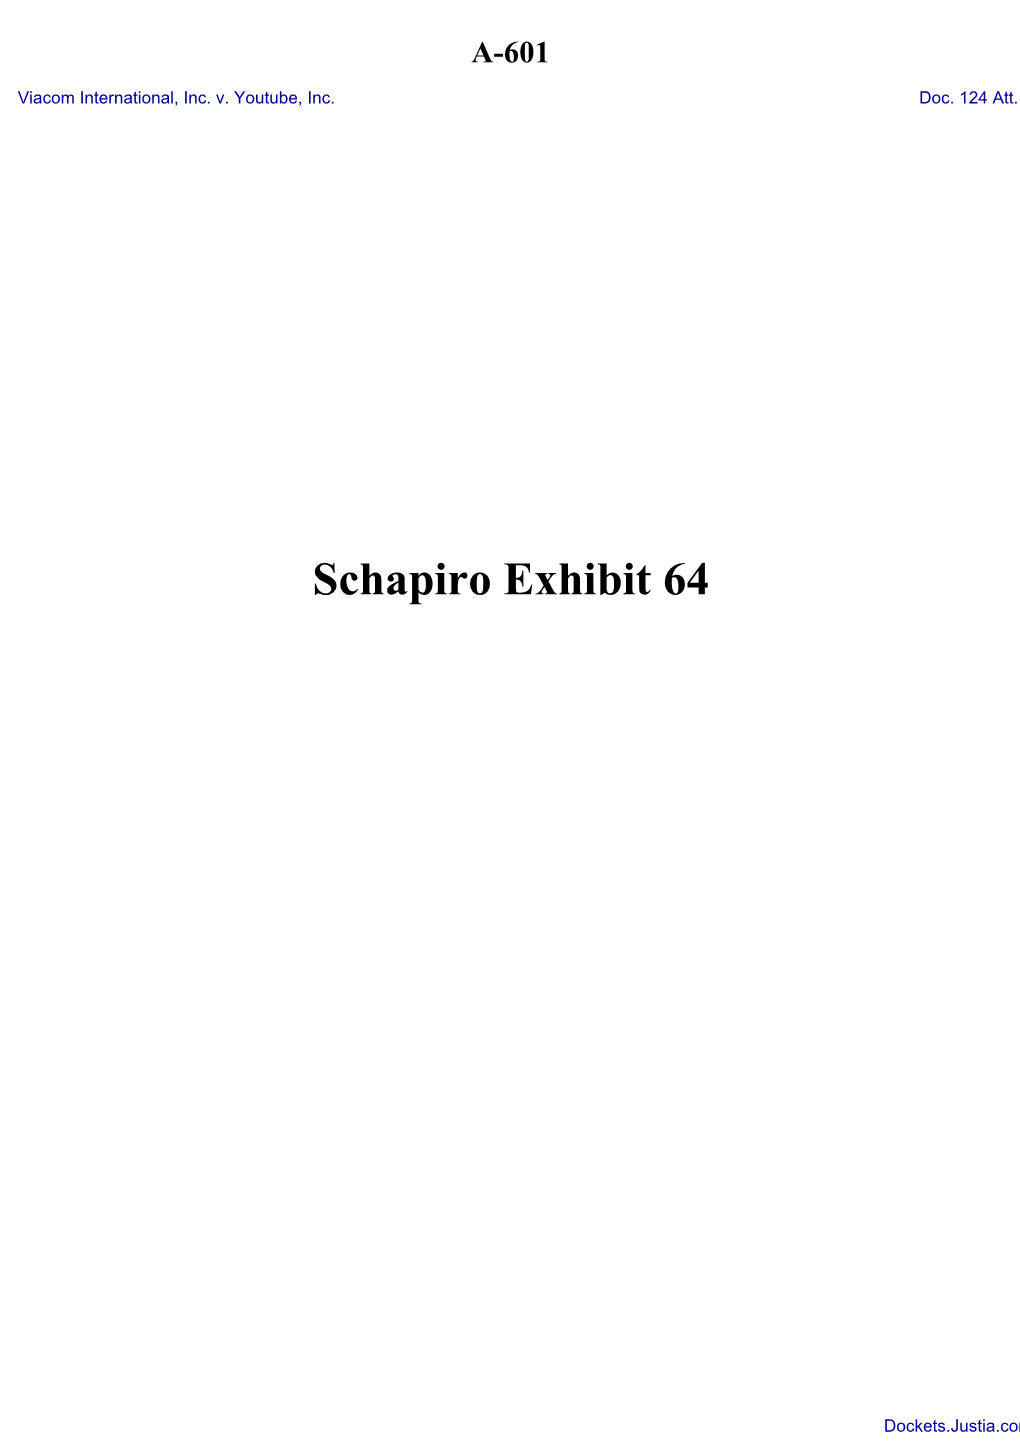 Schapiro Exhibit 64